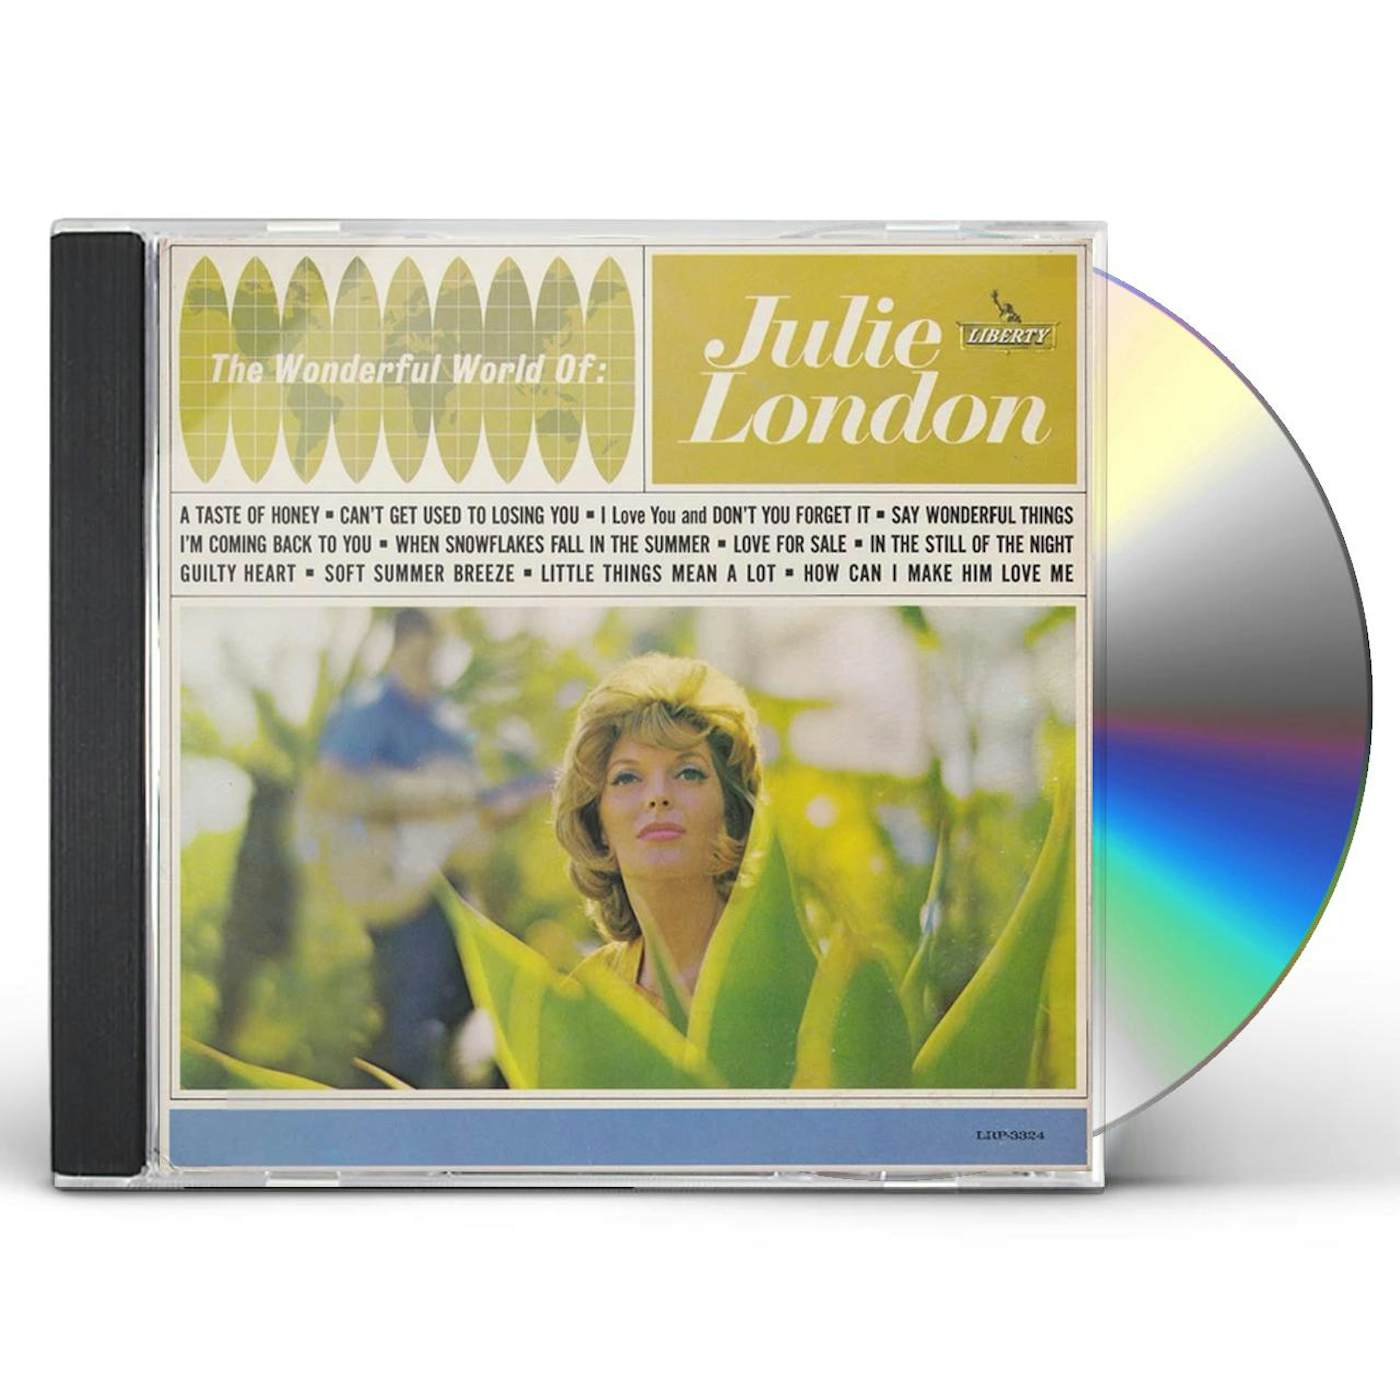 Julie London WONDERFUL WORLD OF CD